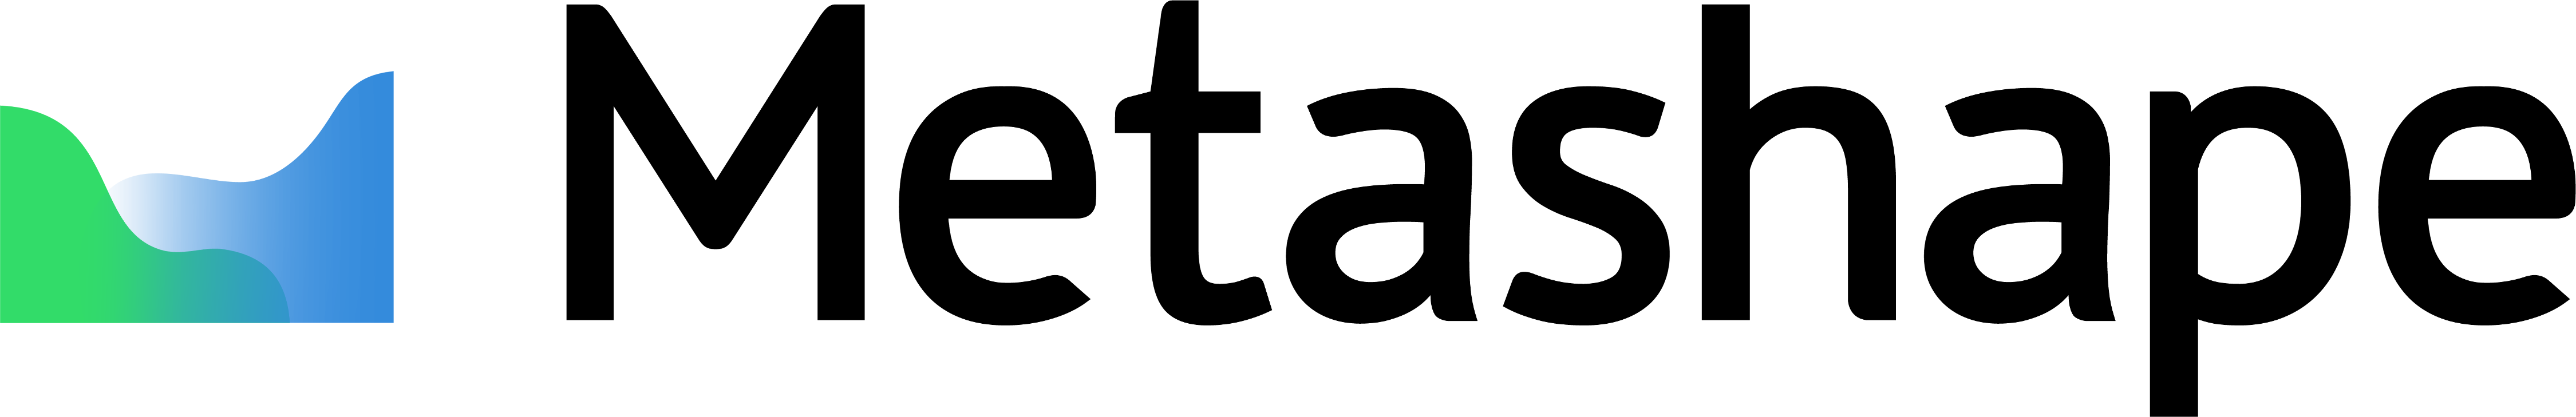 Metashape logo